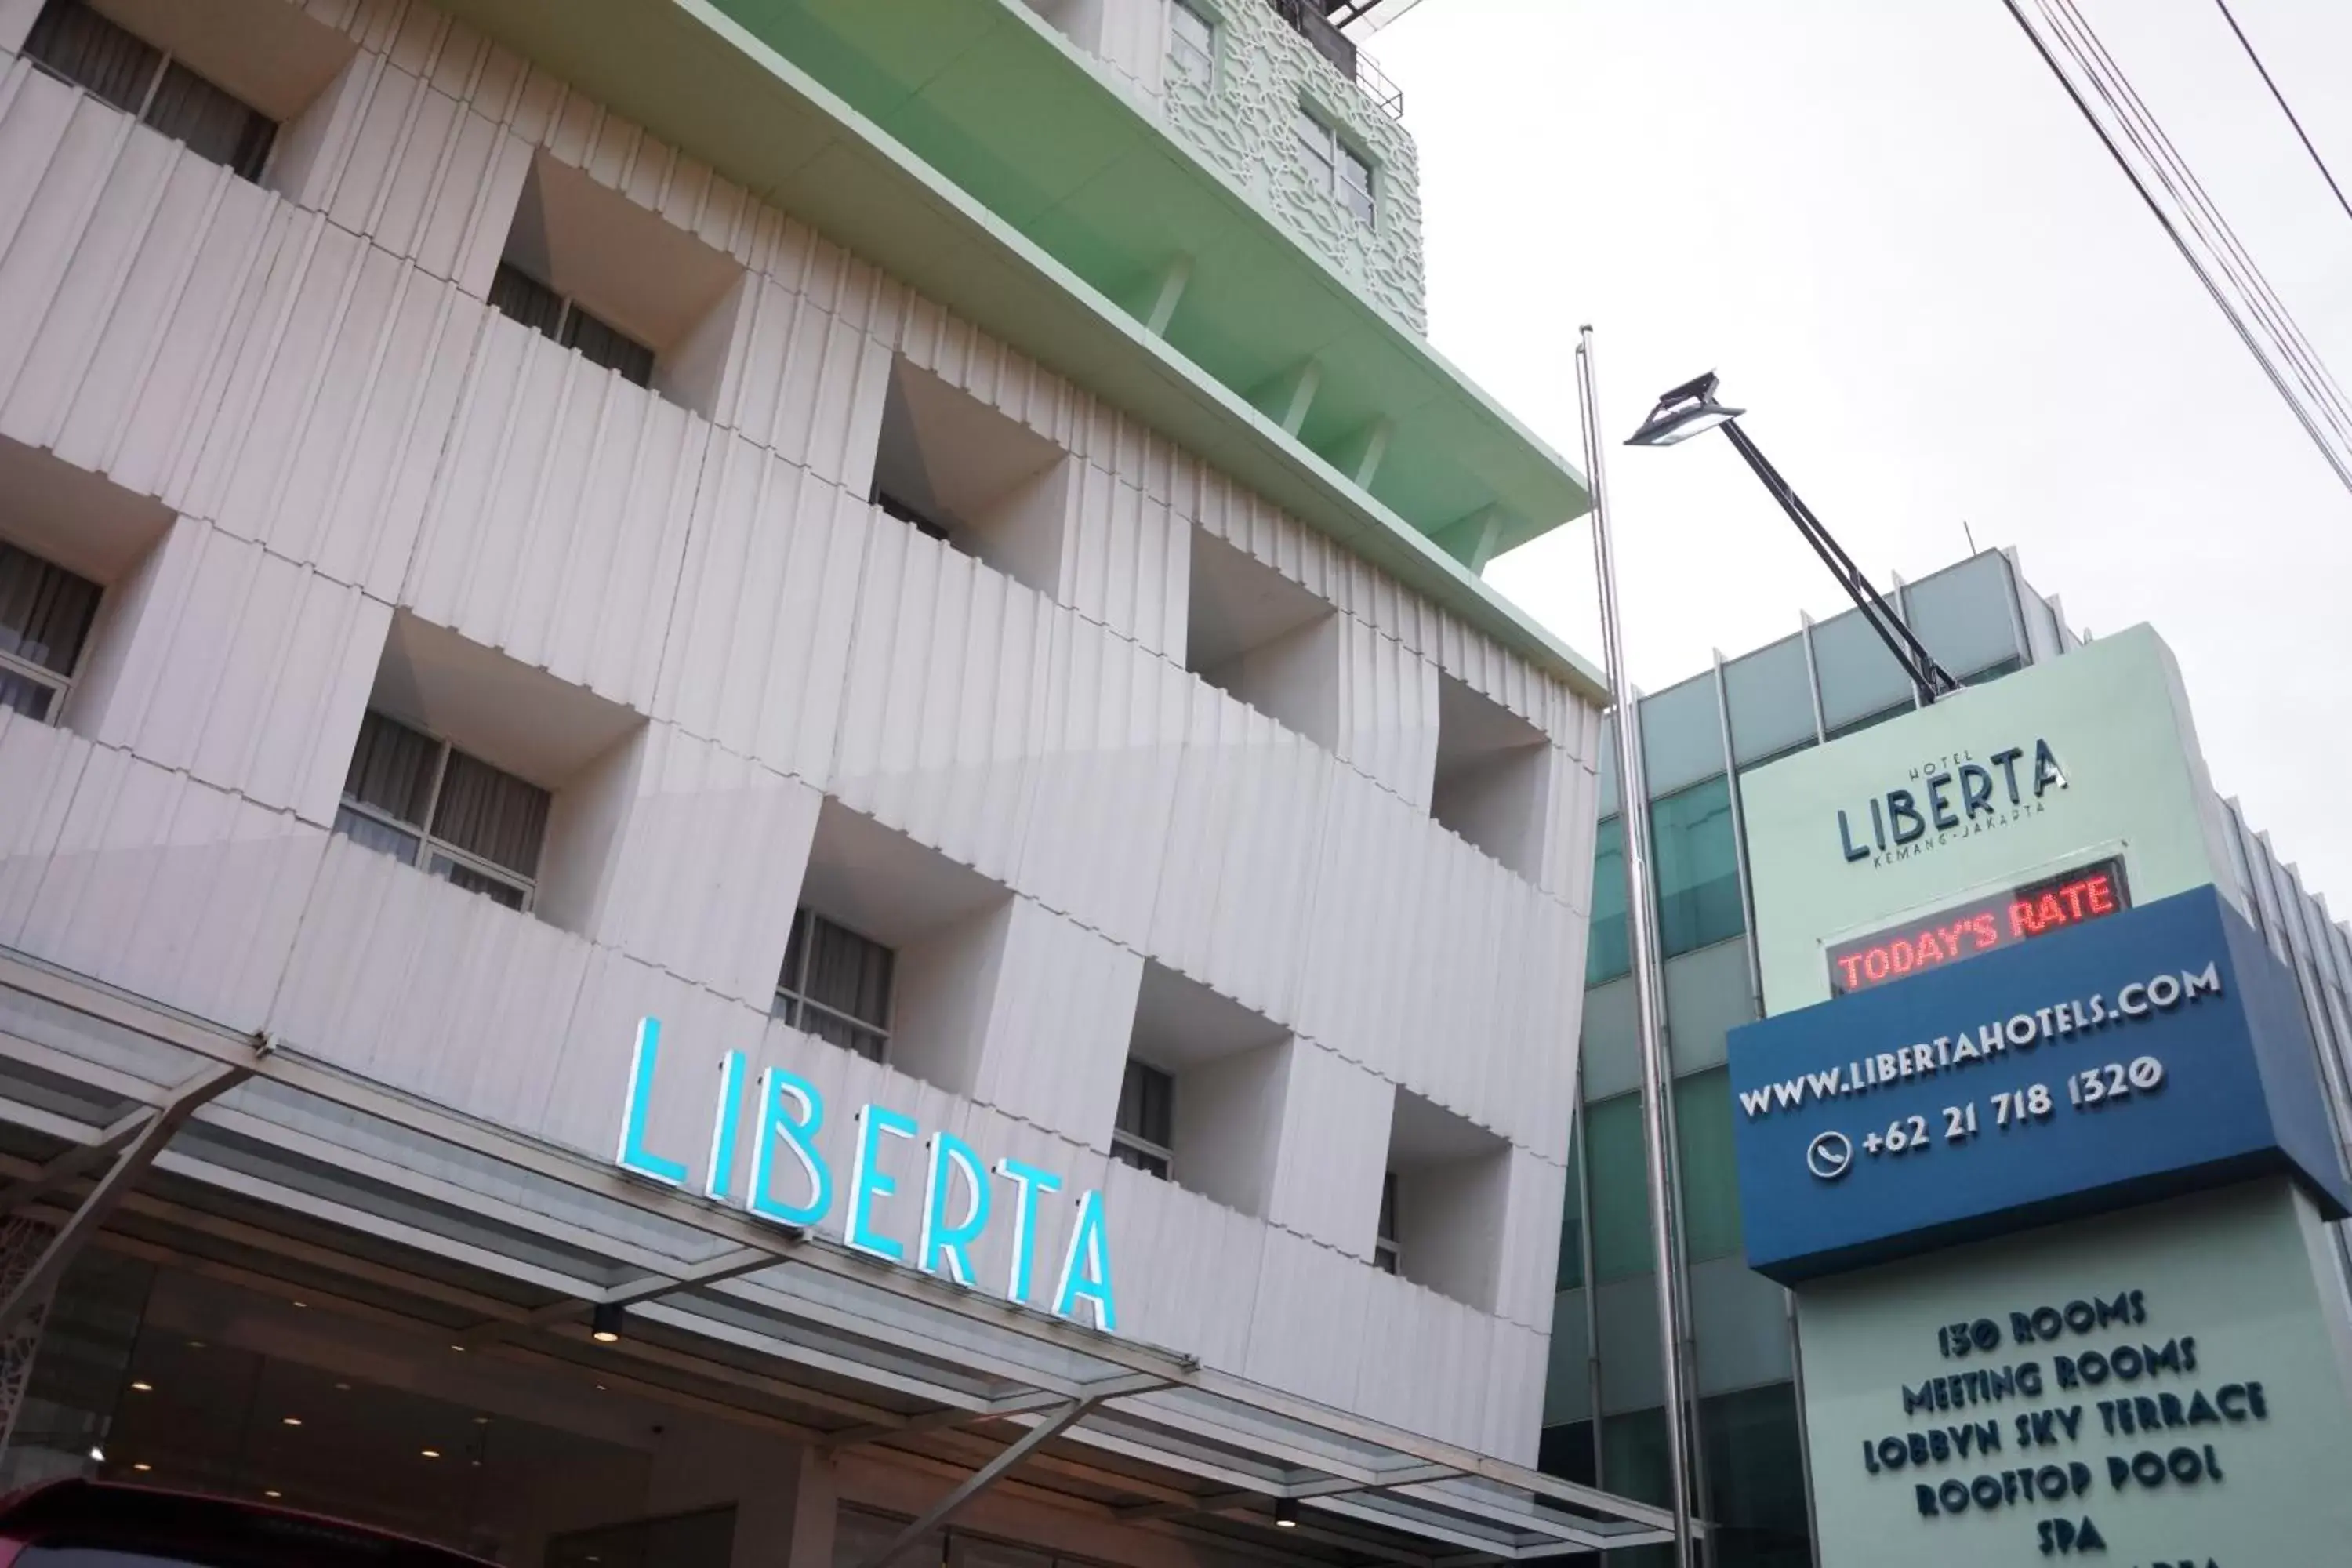 Property Building in Liberta Hotel Kemang